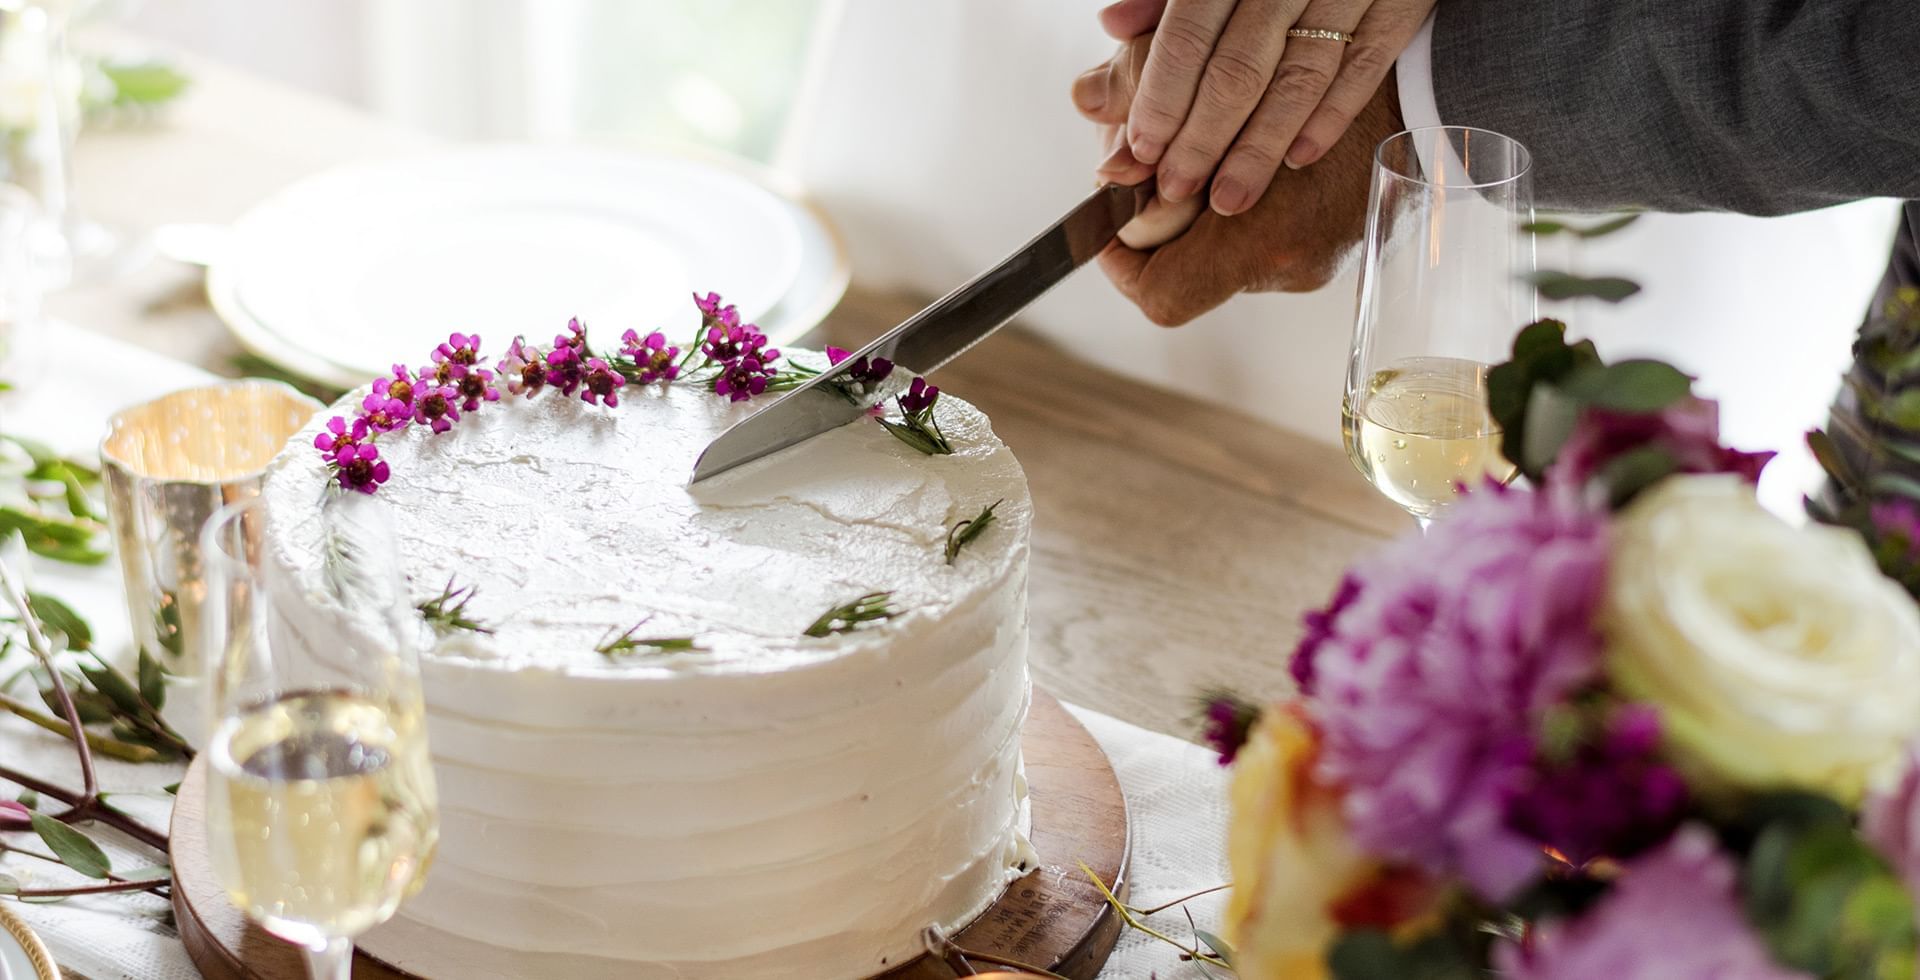 Knife cutting into a wedding cake